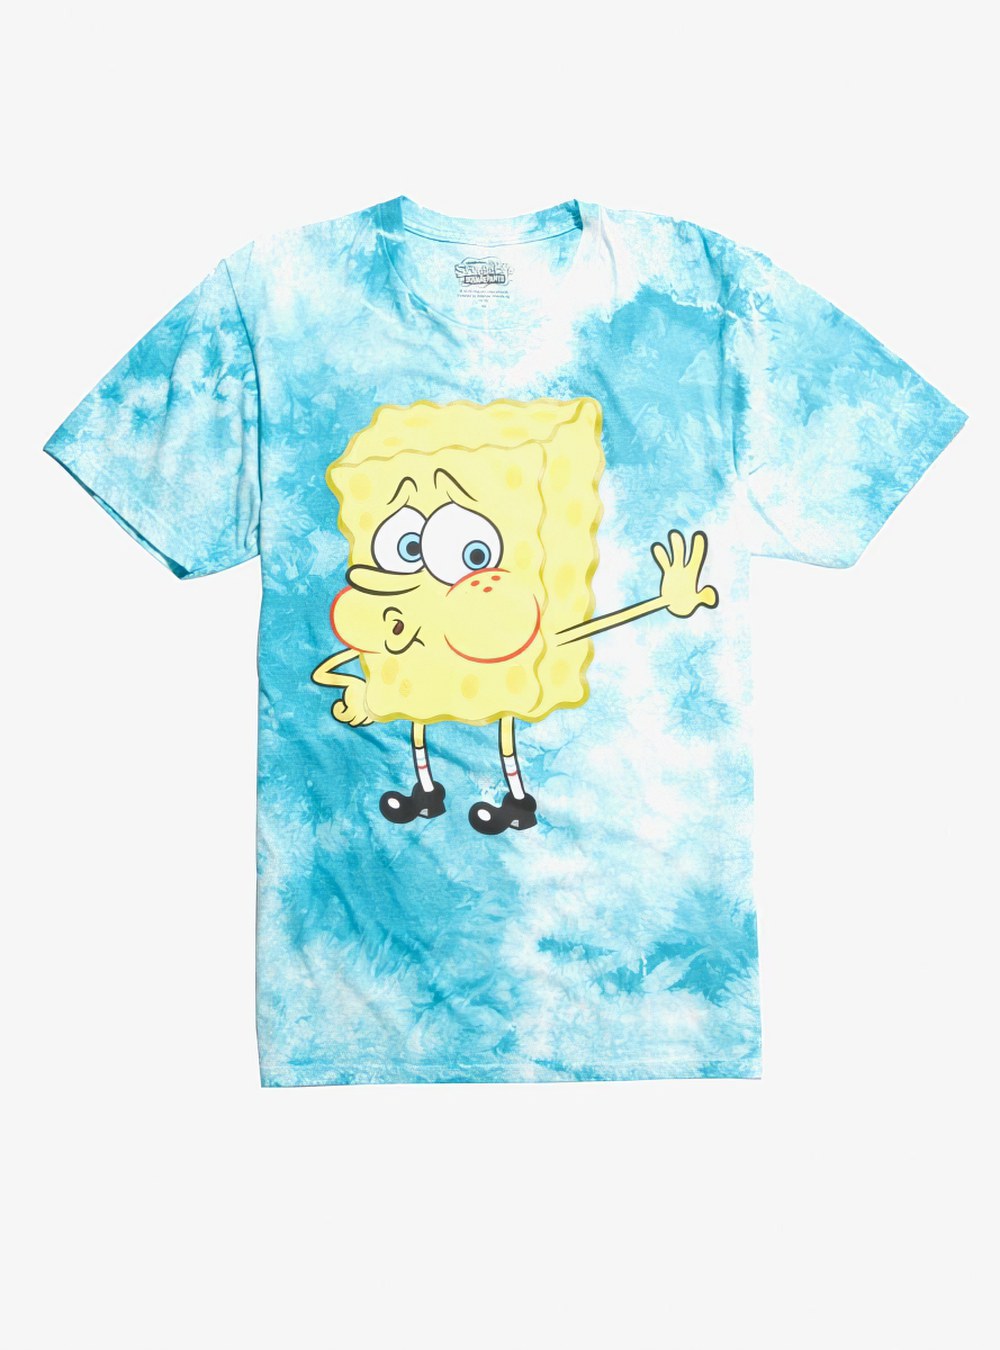 Gangster Spongebob Whistling 3d Shirt Full Size Up To 5xl